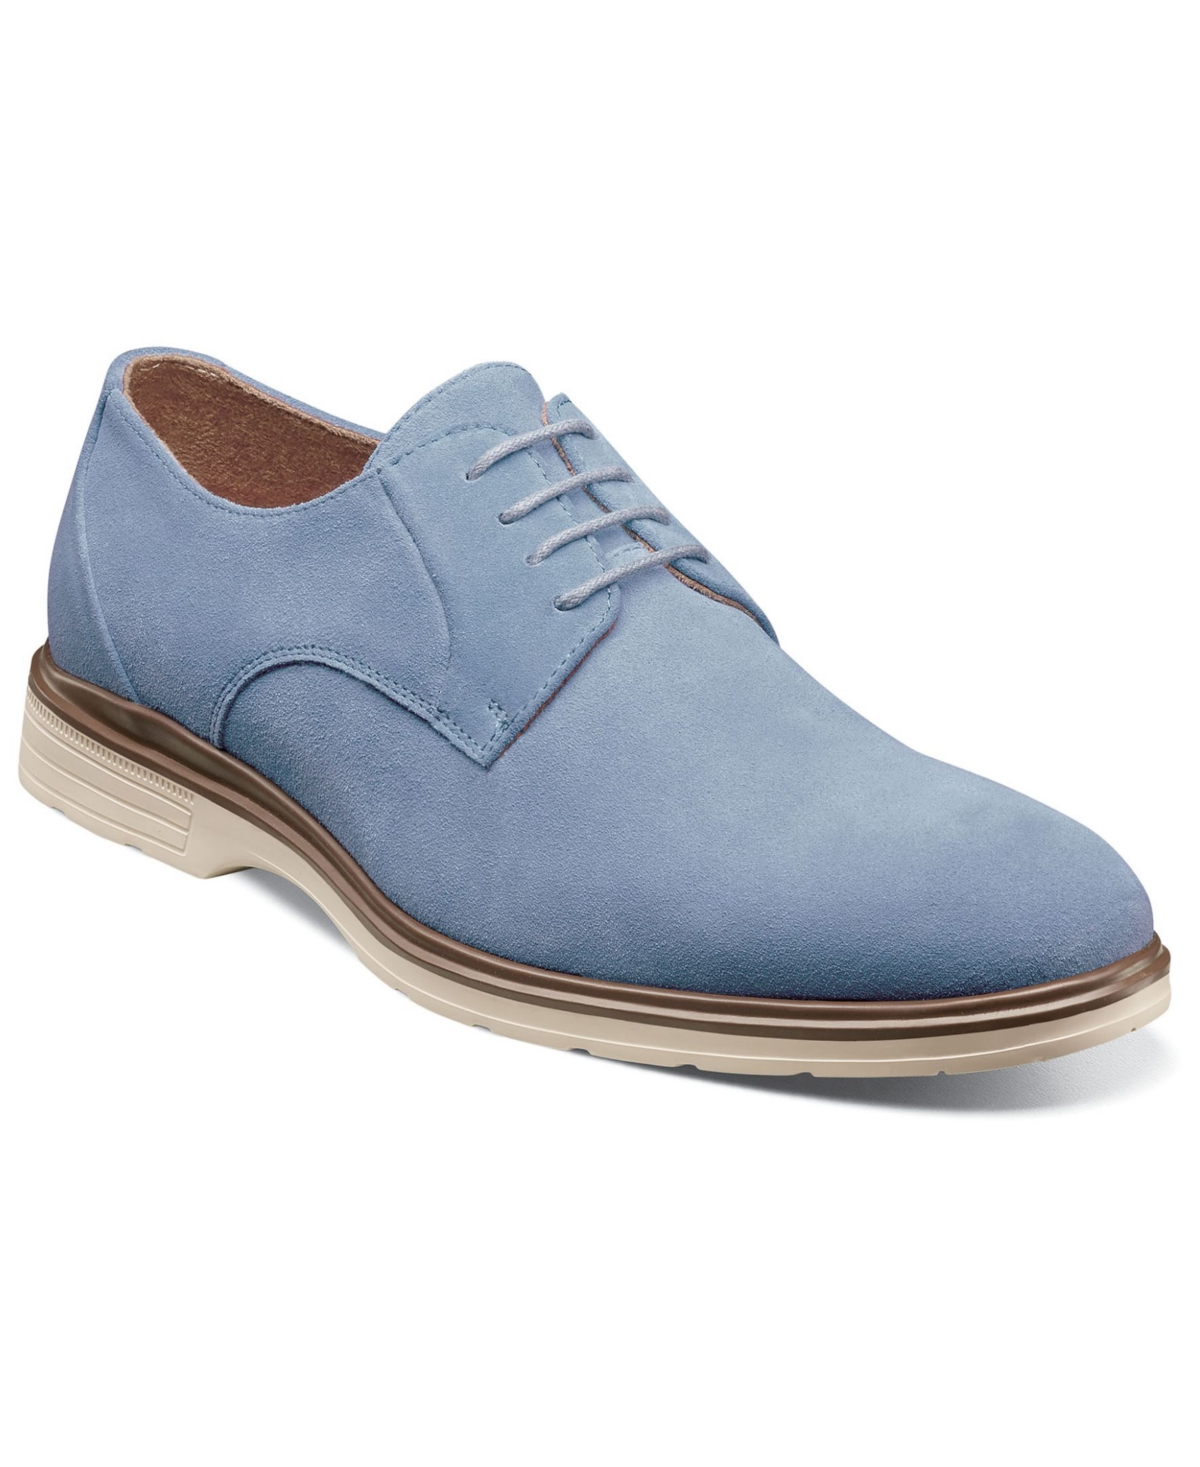 Men's Tayson Plain Toe Oxford Shoes - Sky Blue